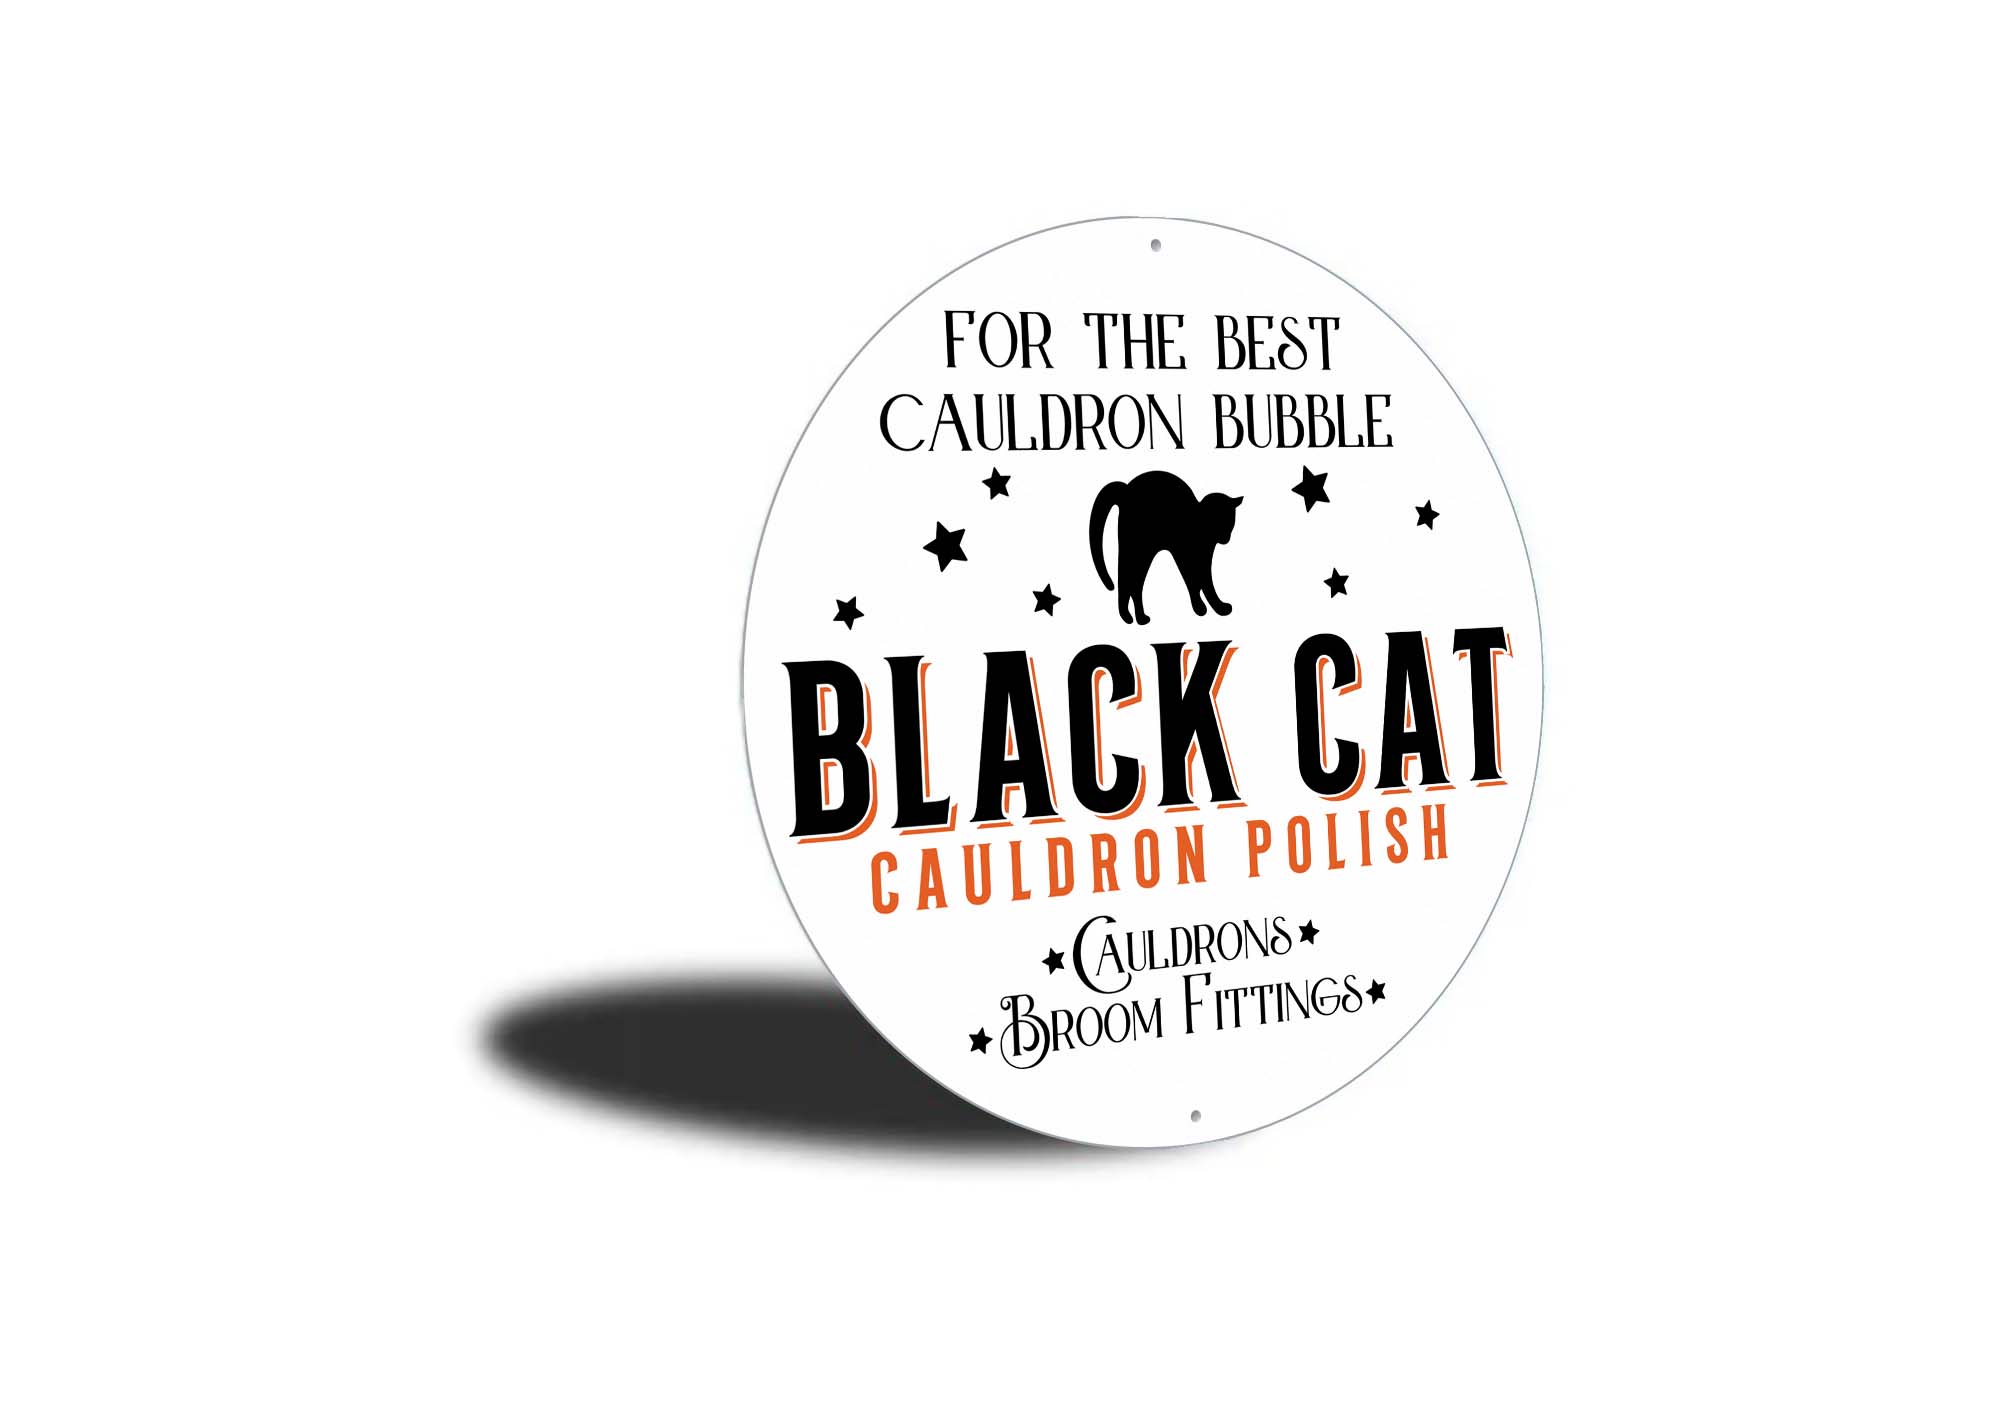 Black Cat Cauldron Polish Halloween Sign